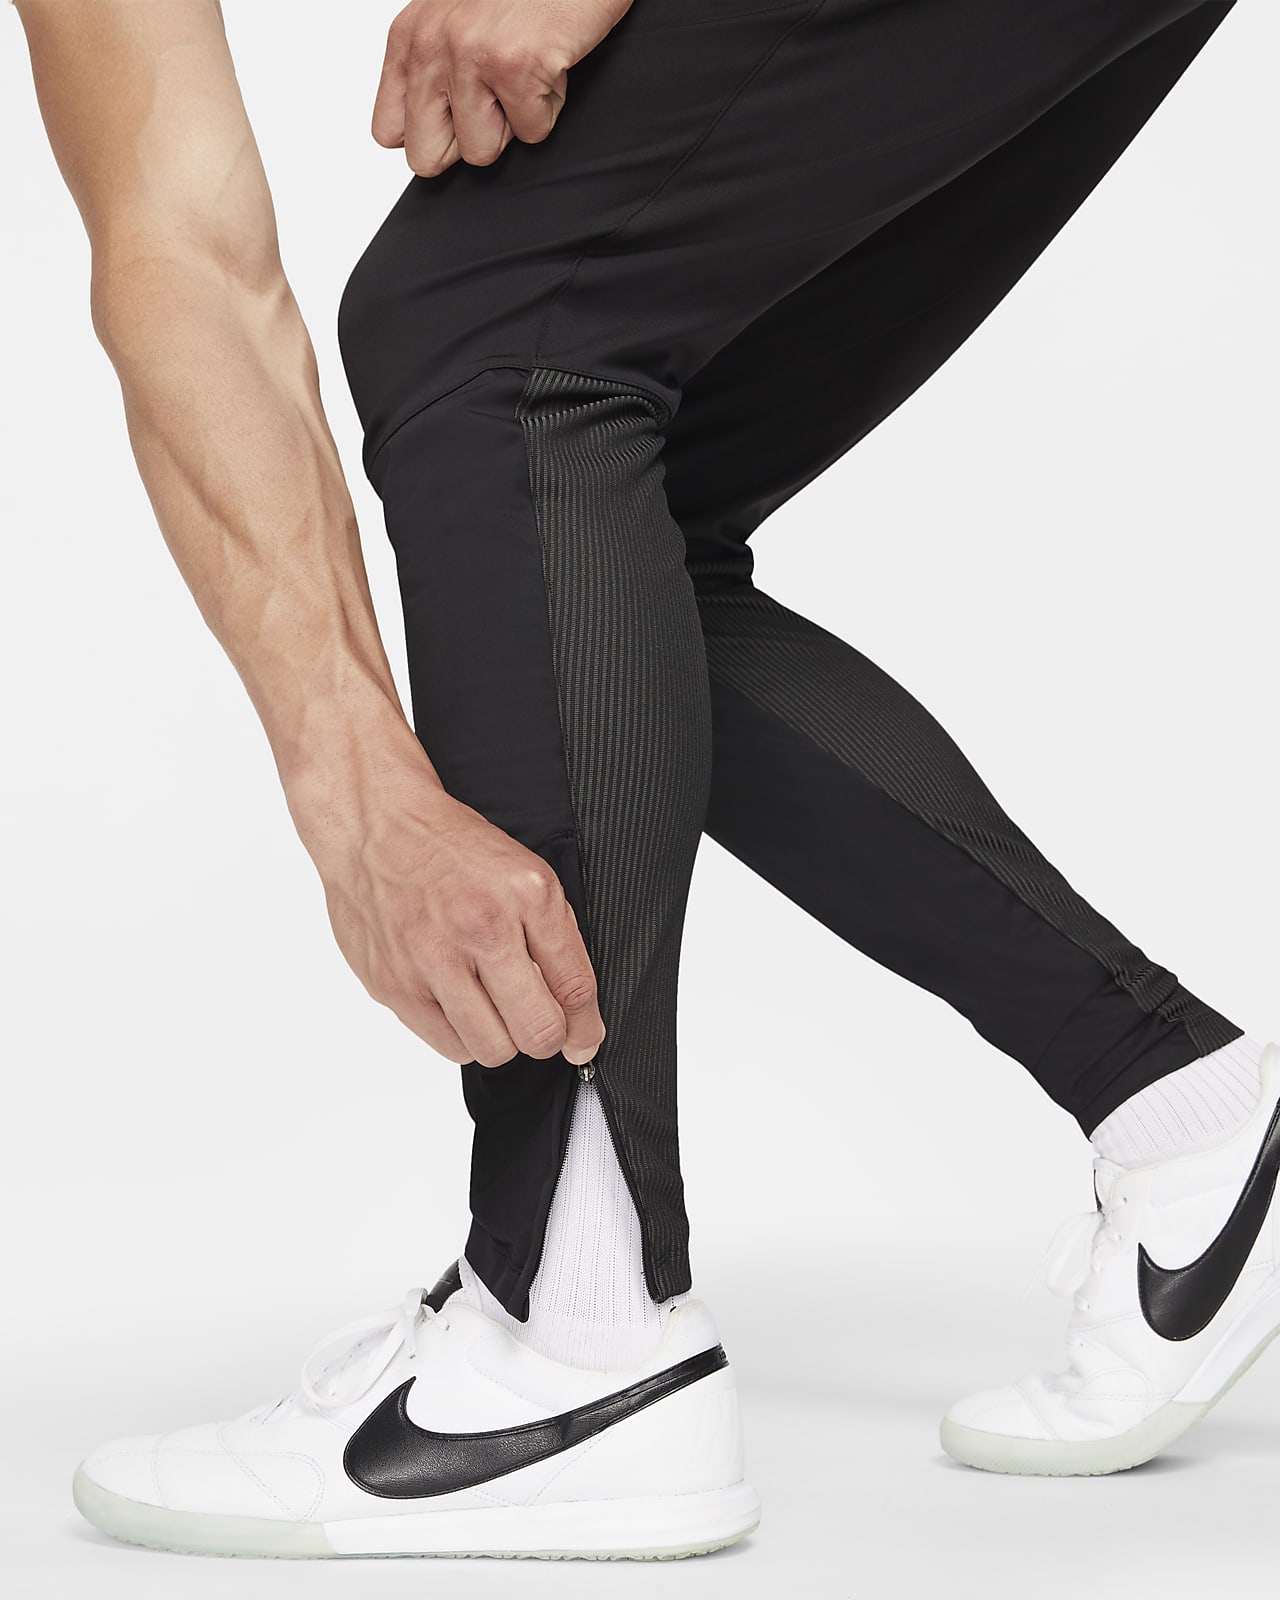 Nike Black Snow Pants for Men